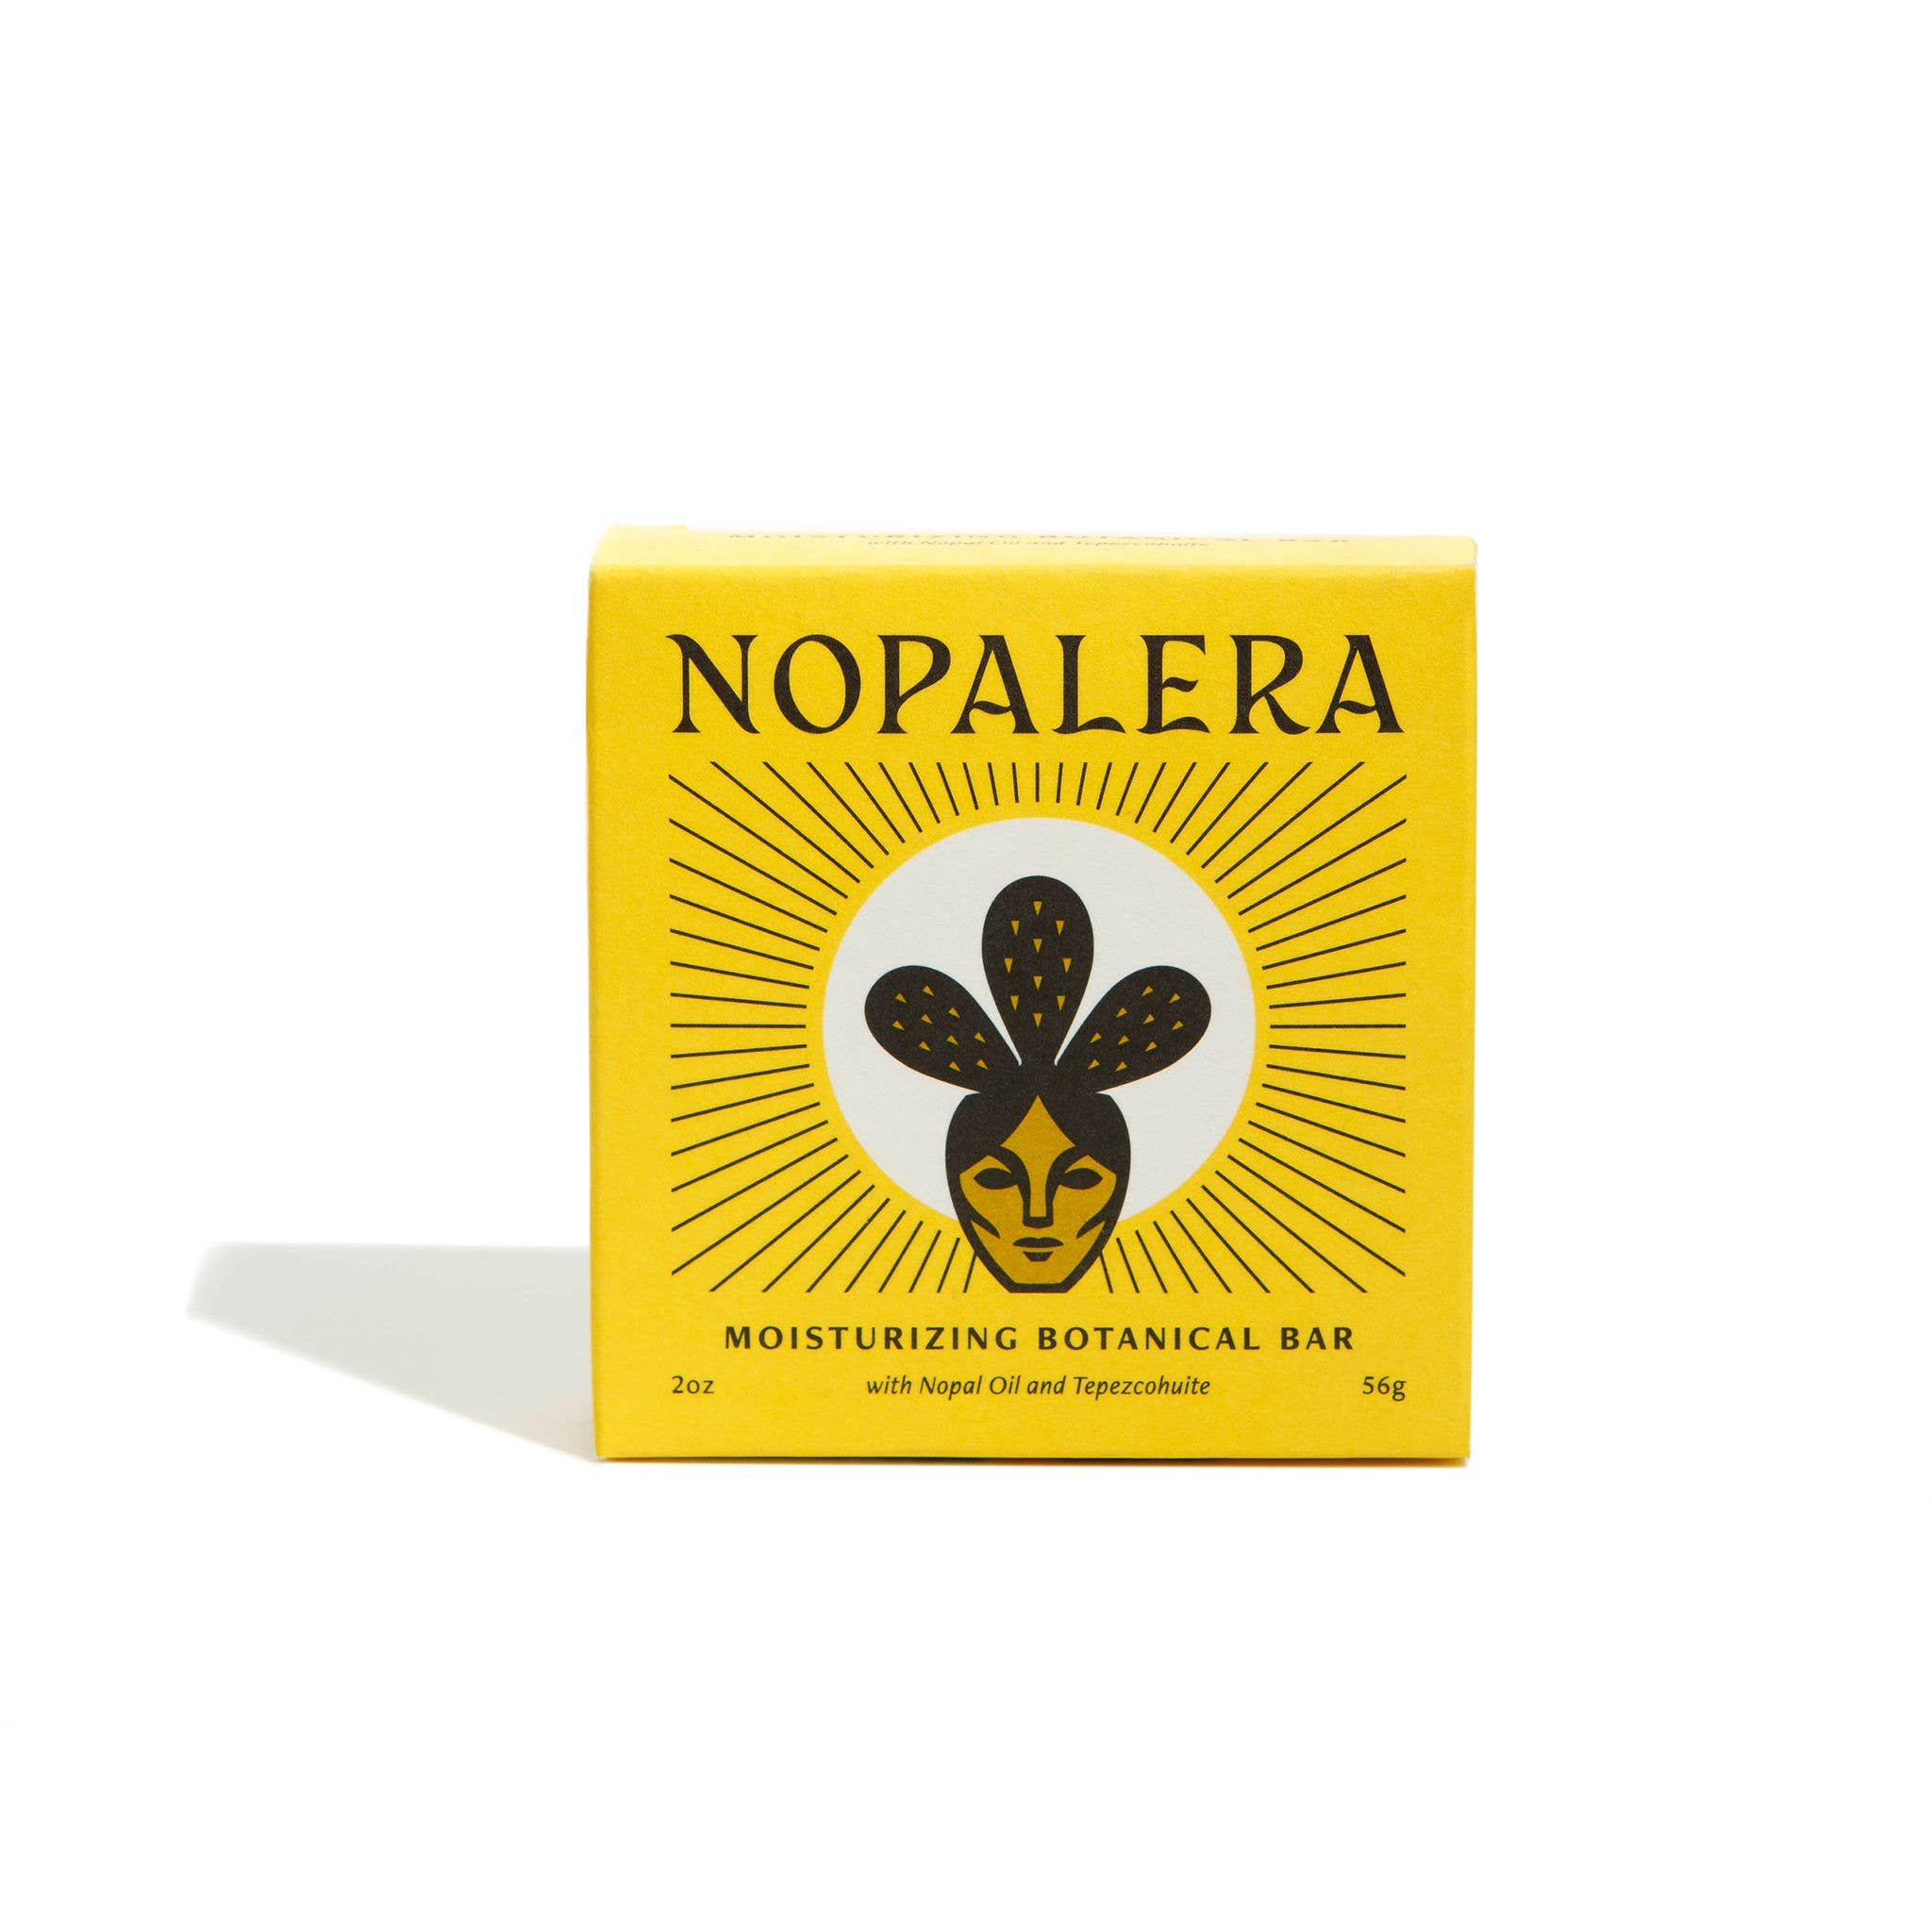 Nopalera - Original Moisturizing Botanical Bar